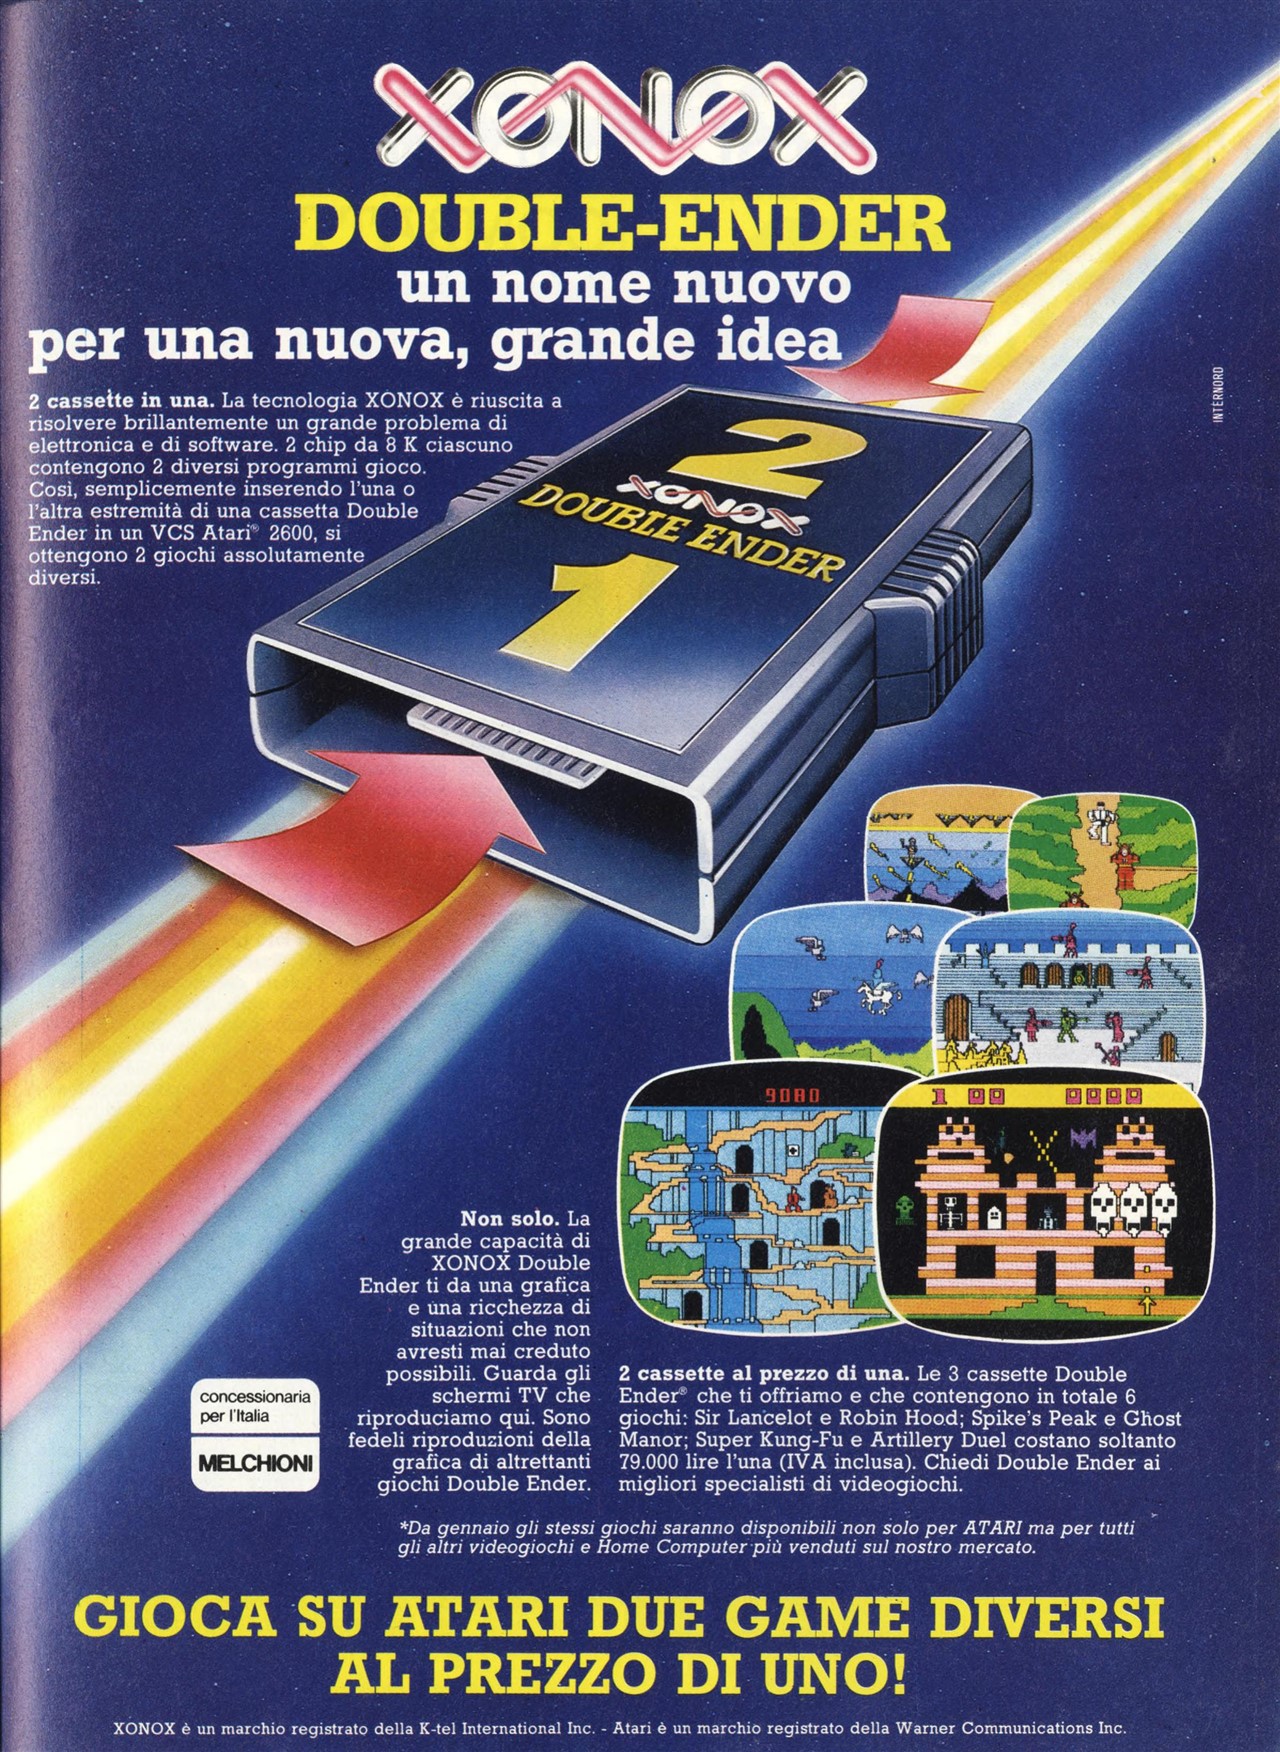 Atari 2600 VCS Spike's Peak / Ghost Manor : scans, dump, download,  screenshots, ads, videos, catalog, instructions, roms